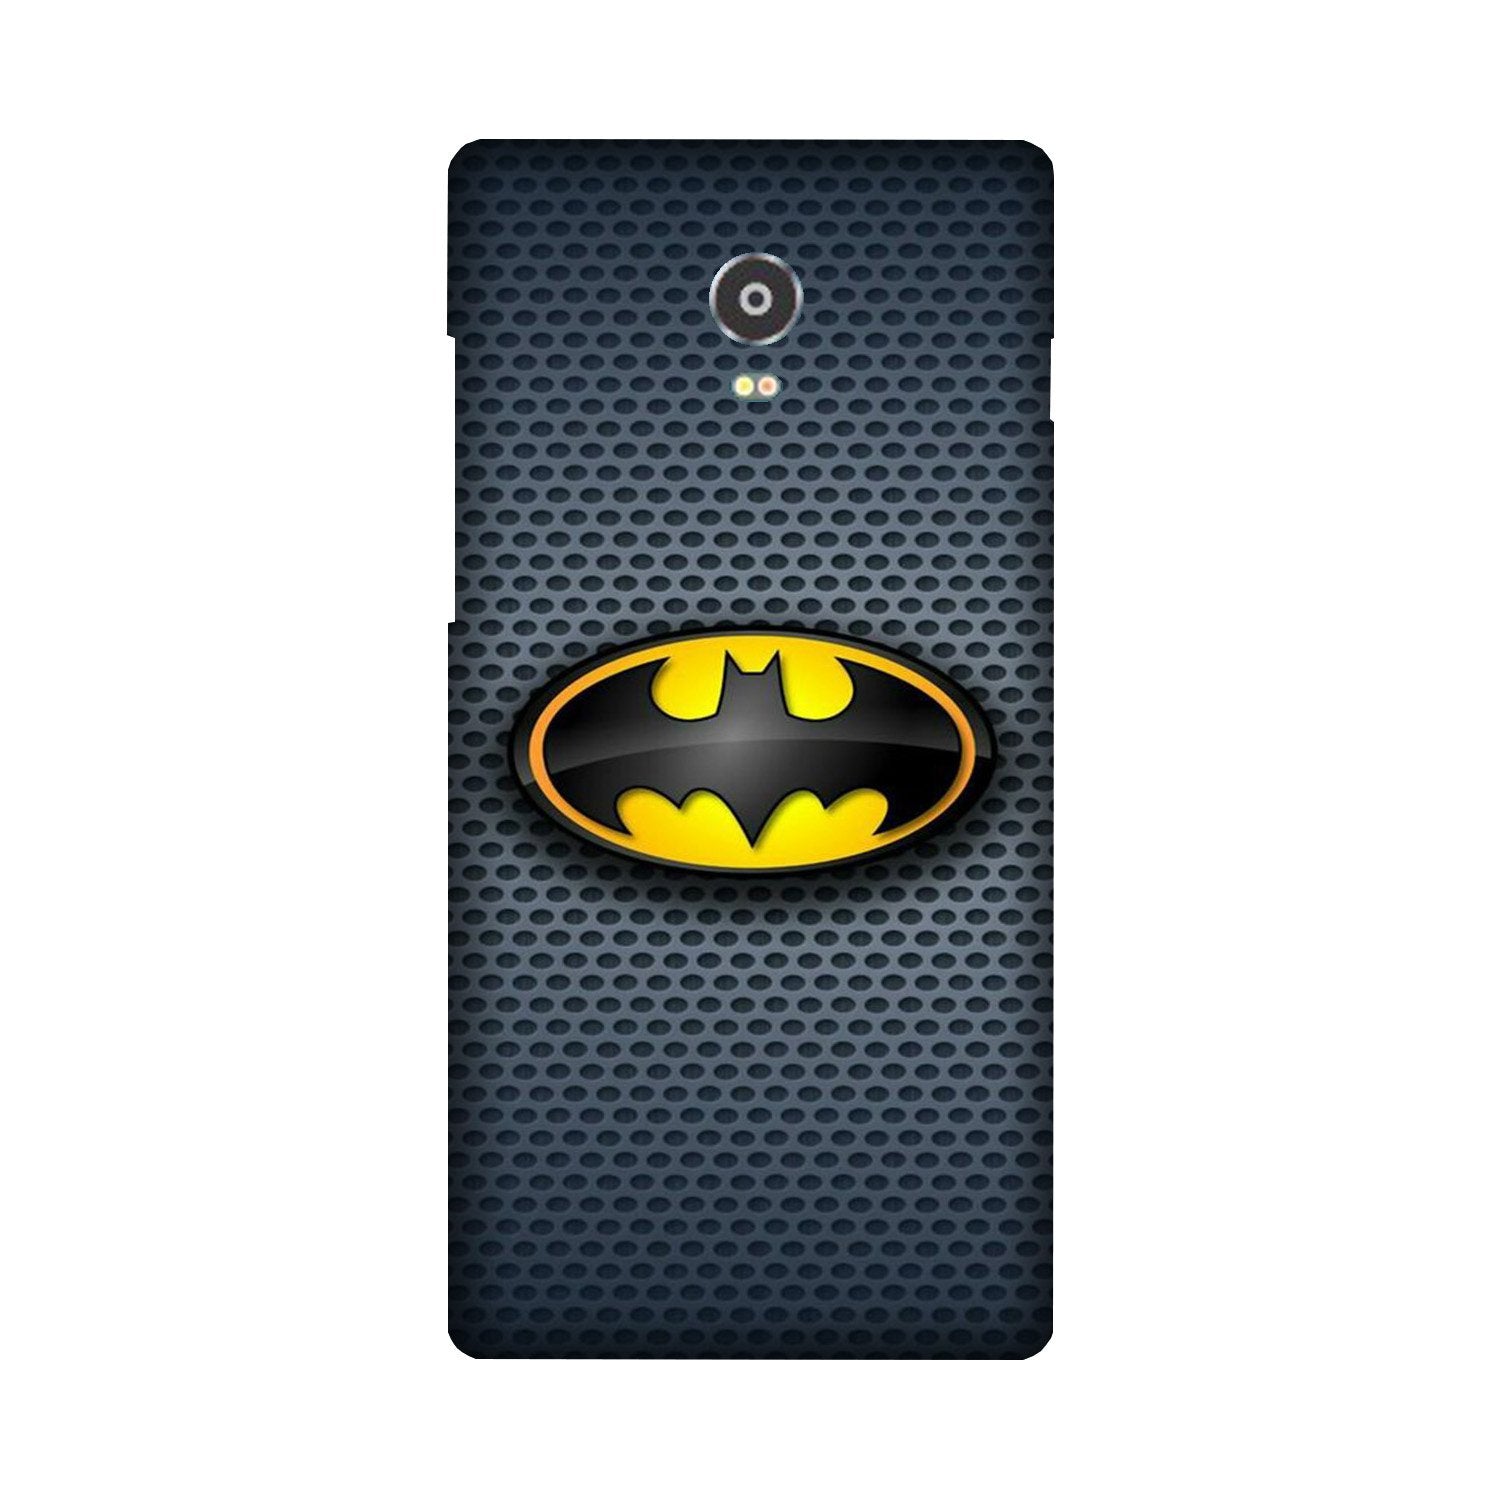 Batman Case for Lenovo Vibe P1 (Design No. 244)